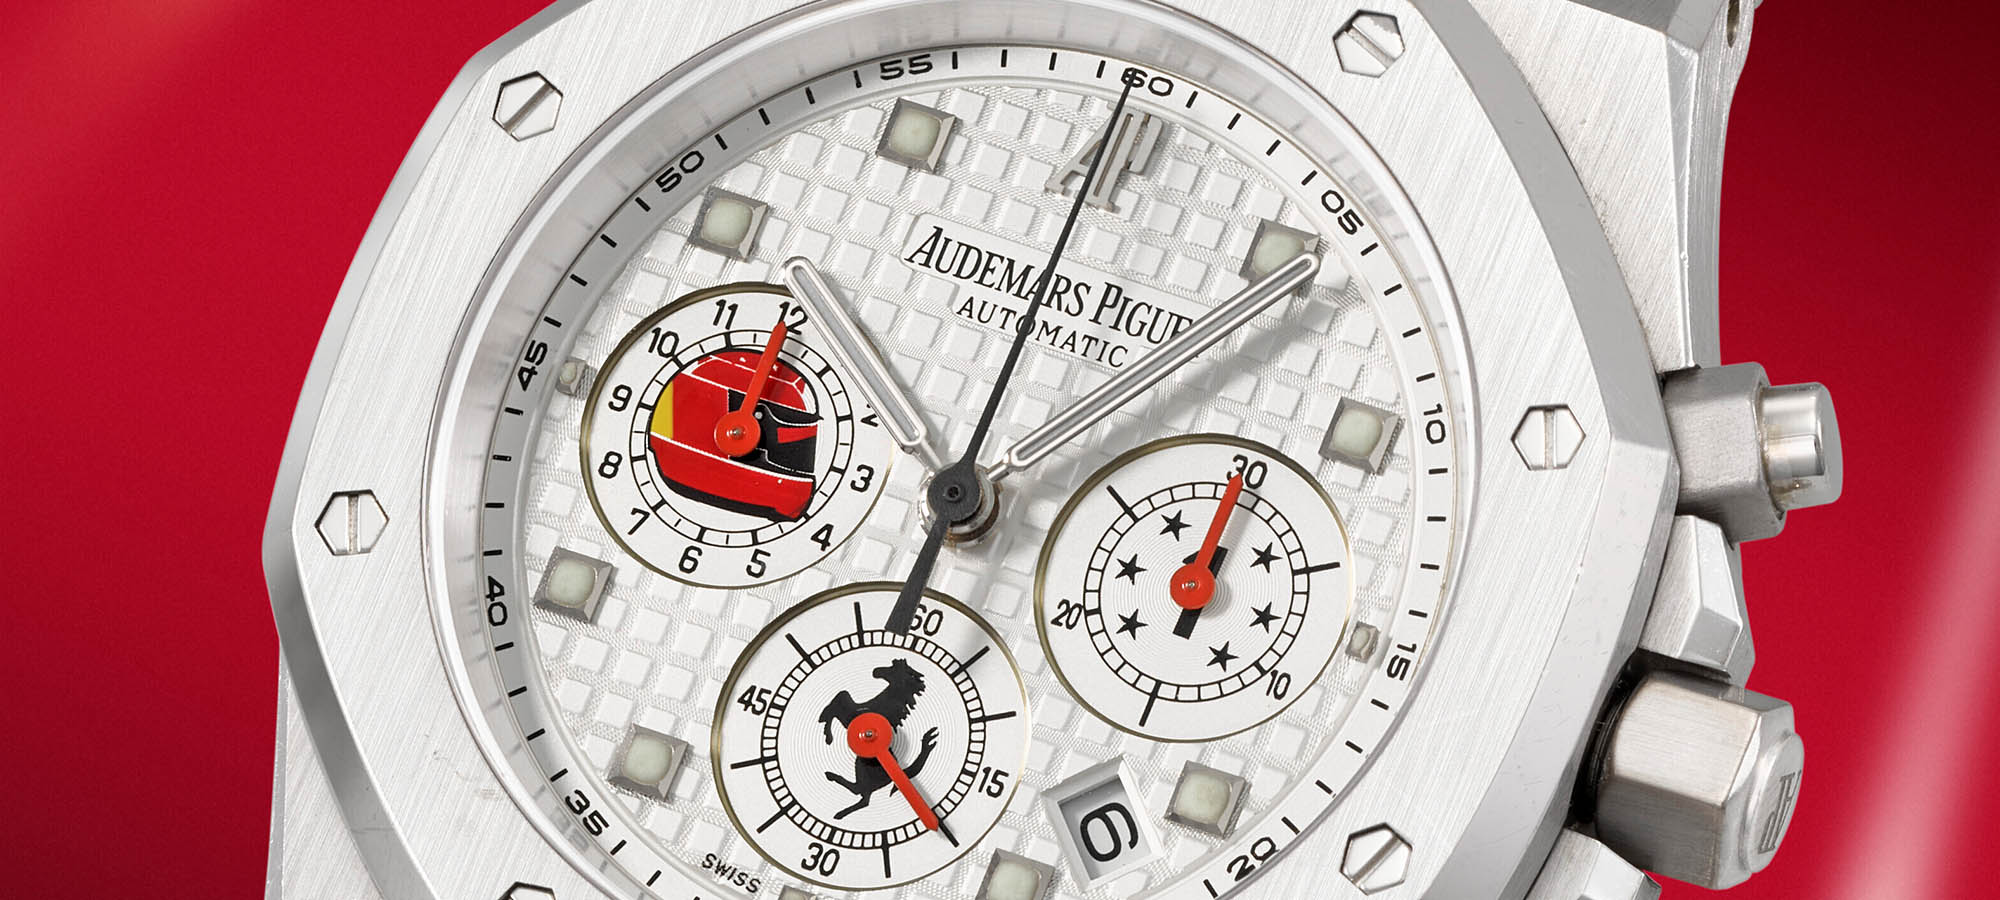 Christie's Is Set To Auction F1 Legend Michael Schumacher's Timepiece Collection